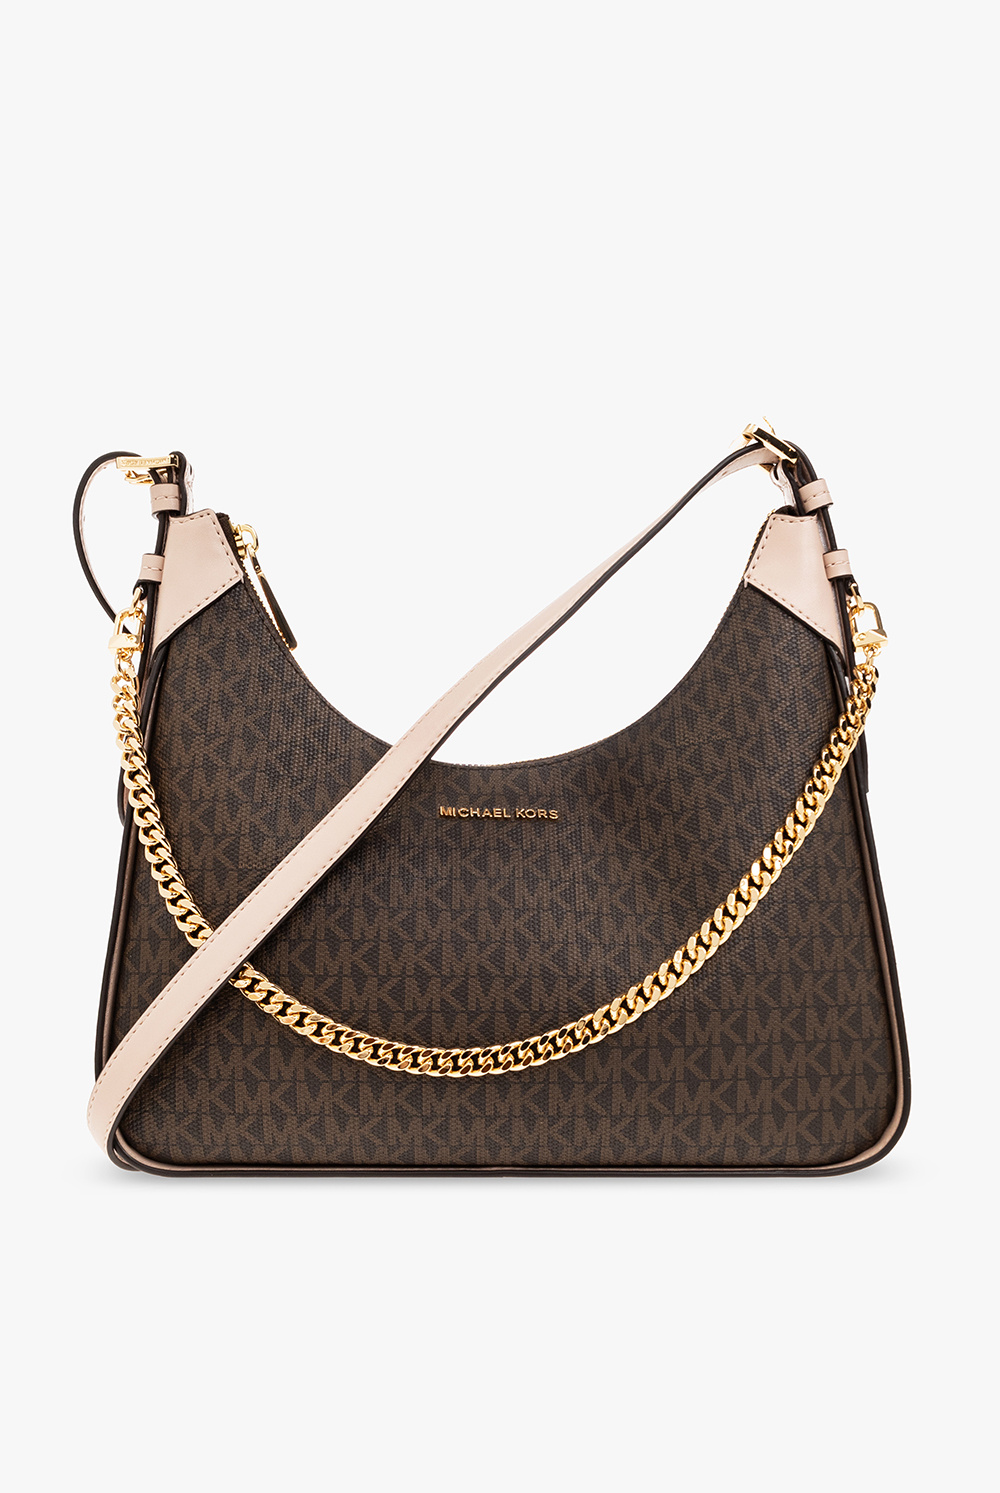 Handbags Pu Leather Michael Kors Handbag, For Office, Size: H-10inch  W-15inch